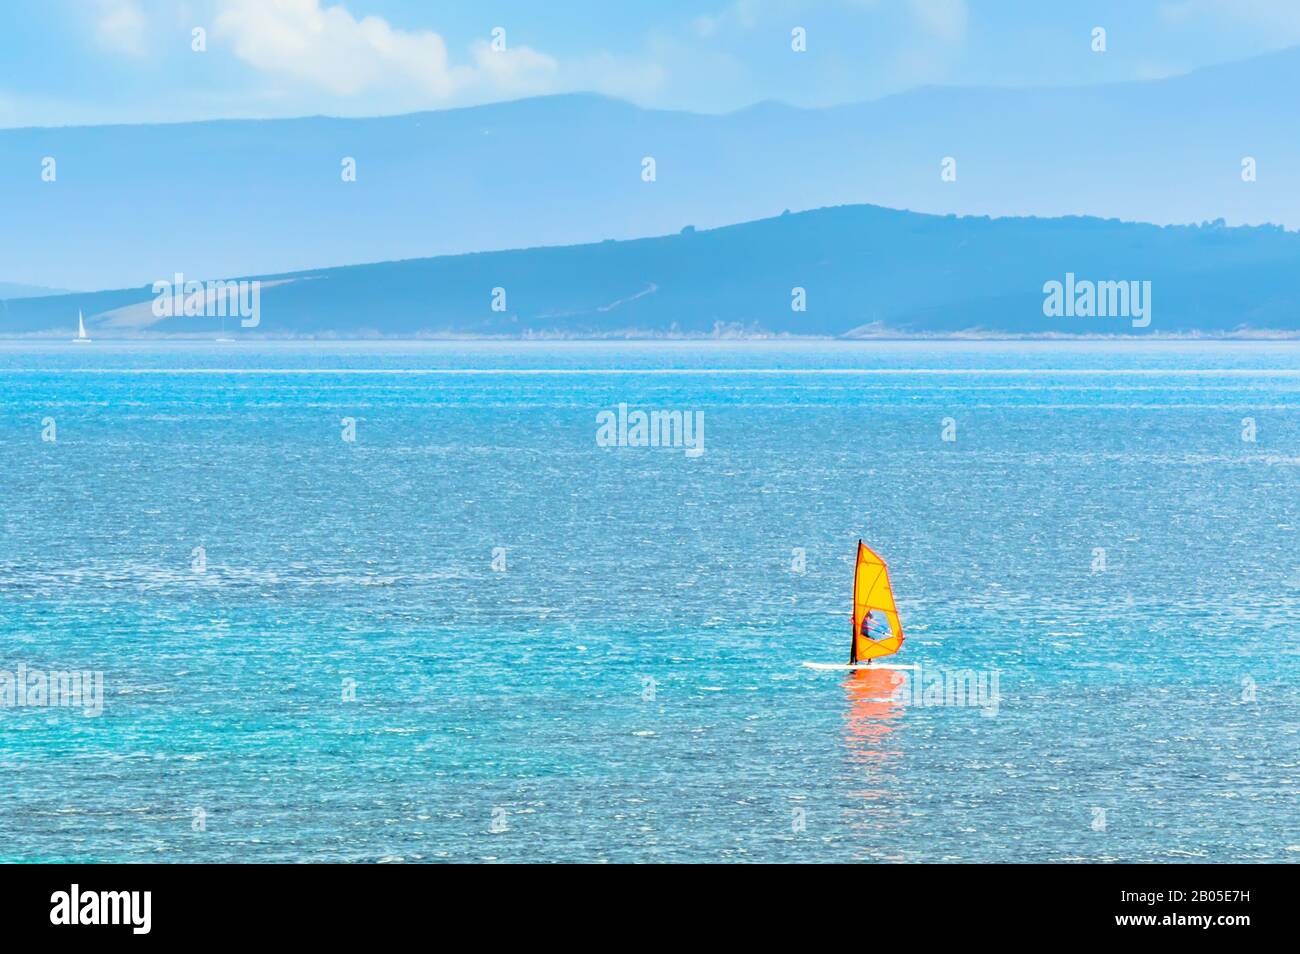 Windsurfer on yellow sailboard in Adriatic Sea in Bol on Brac Island near Split, Croatia. Water sports windsurfing in turquoise water and mountains in Stock Photo